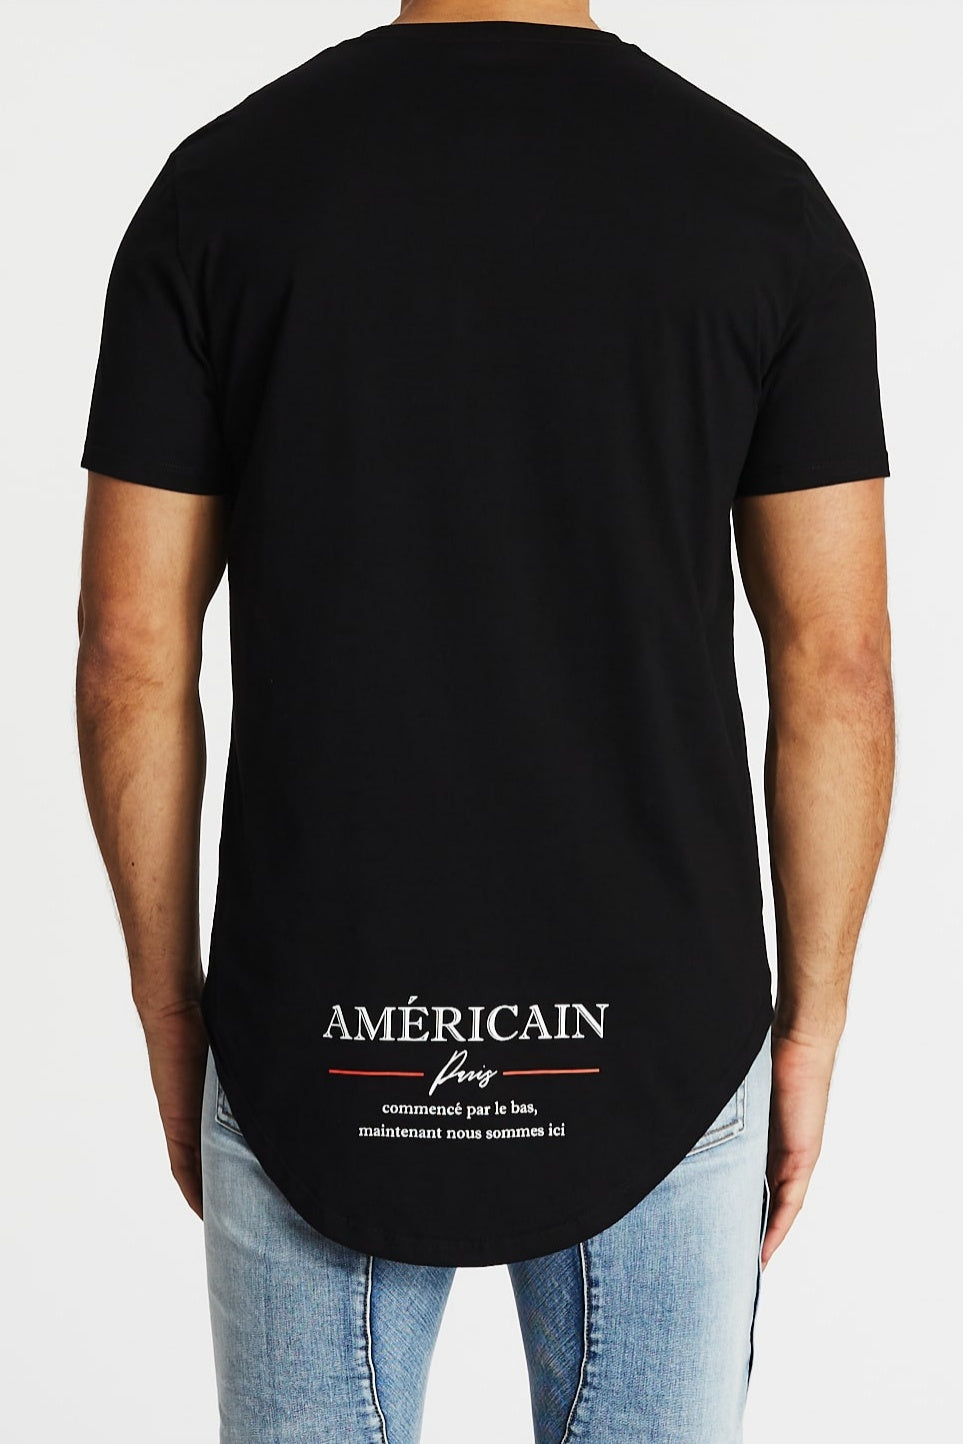 AMERICAIN Mens Oublier Dual Curved Hem Tee Shirt - Black